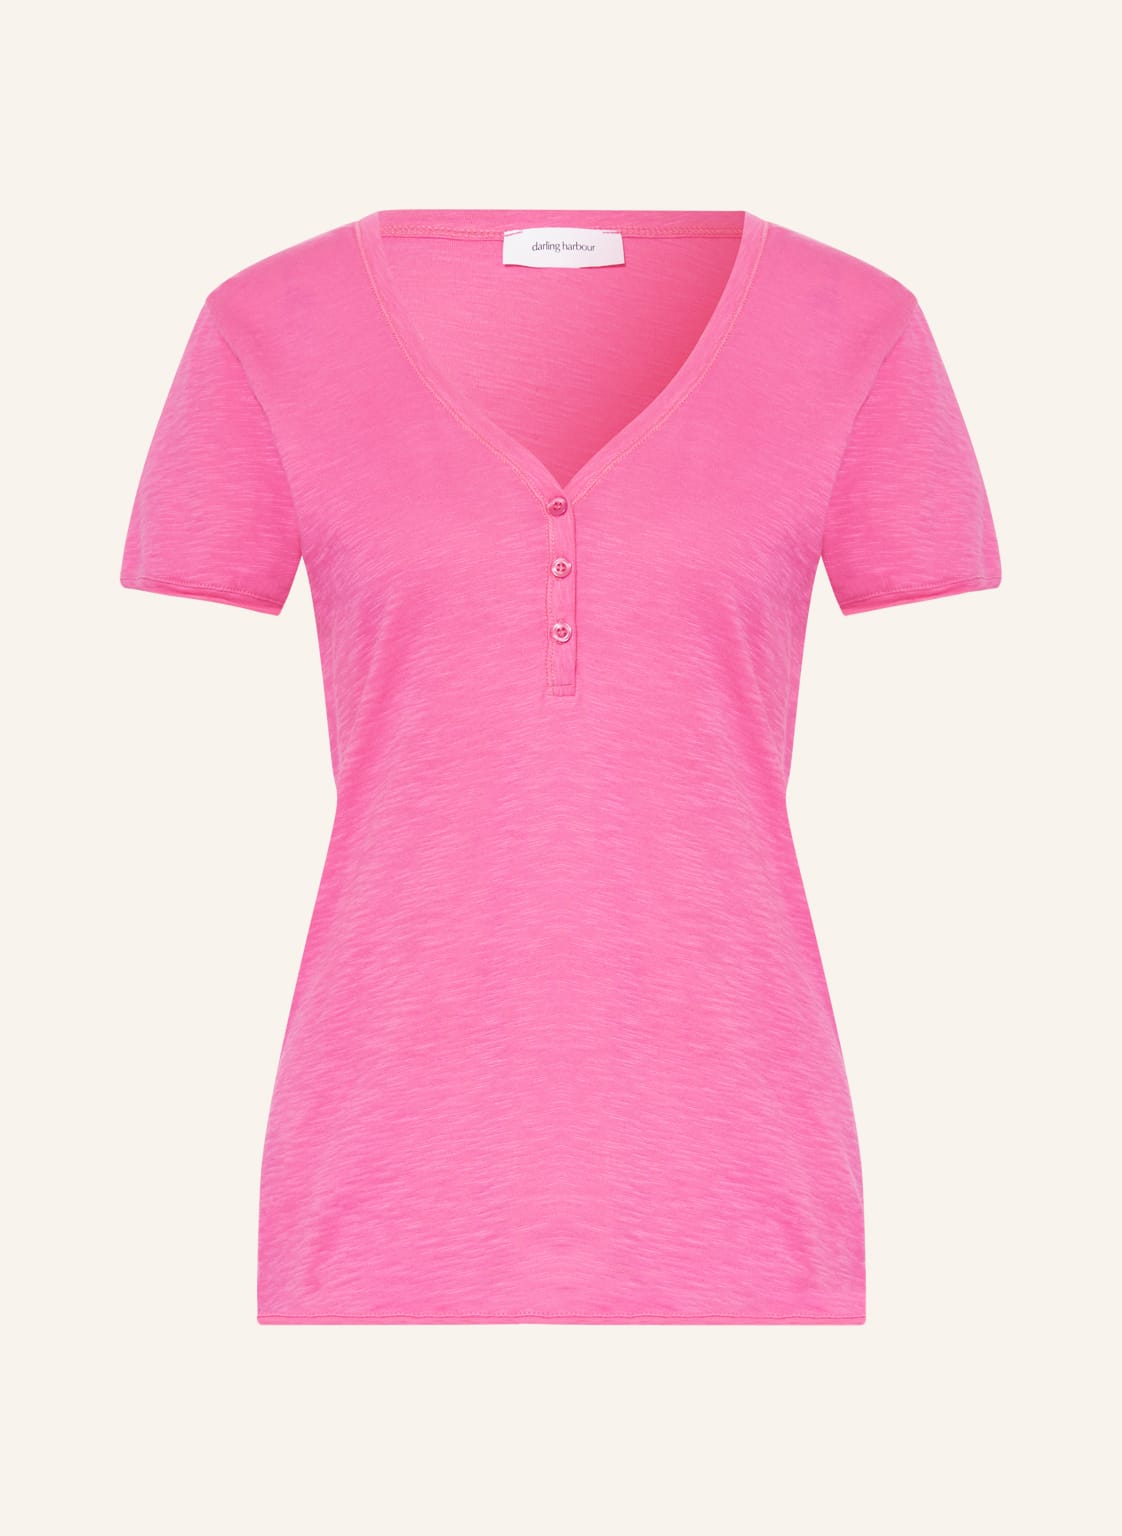 Darling Harbour T-Shirt pink von darling harbour